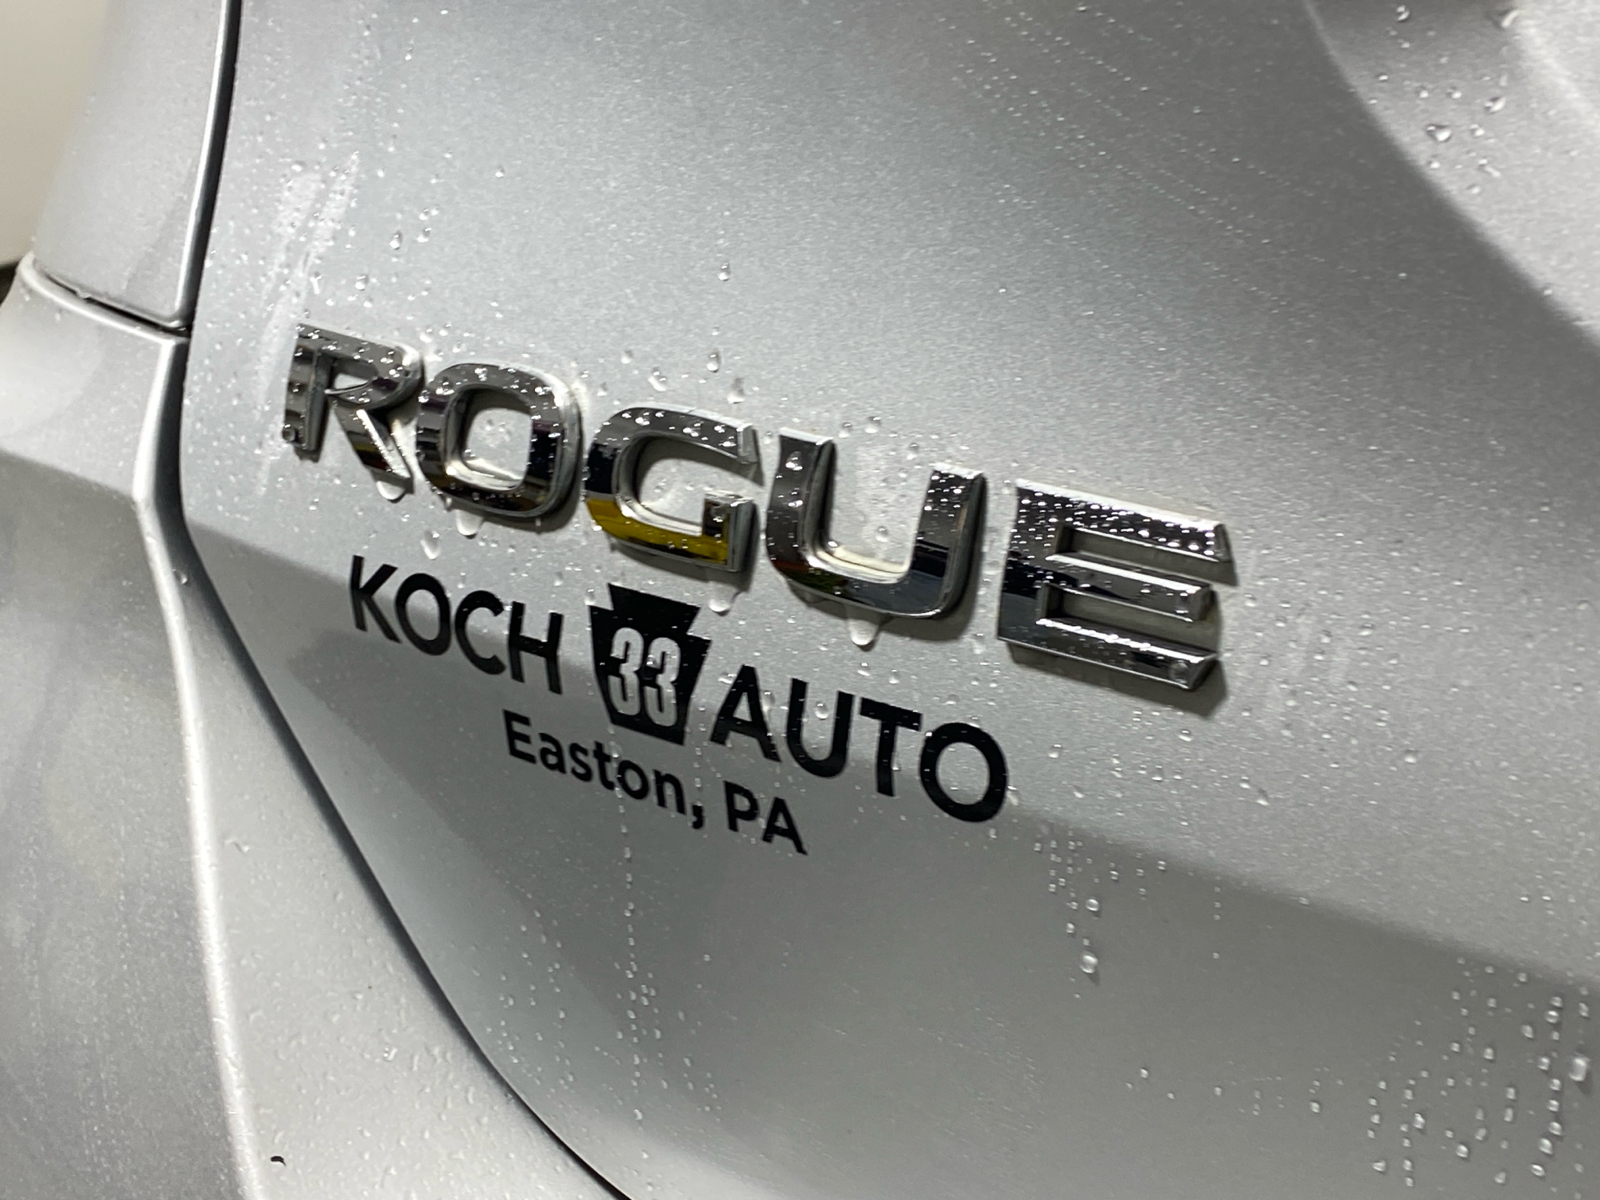 2018 Nissan Rogue SV 9